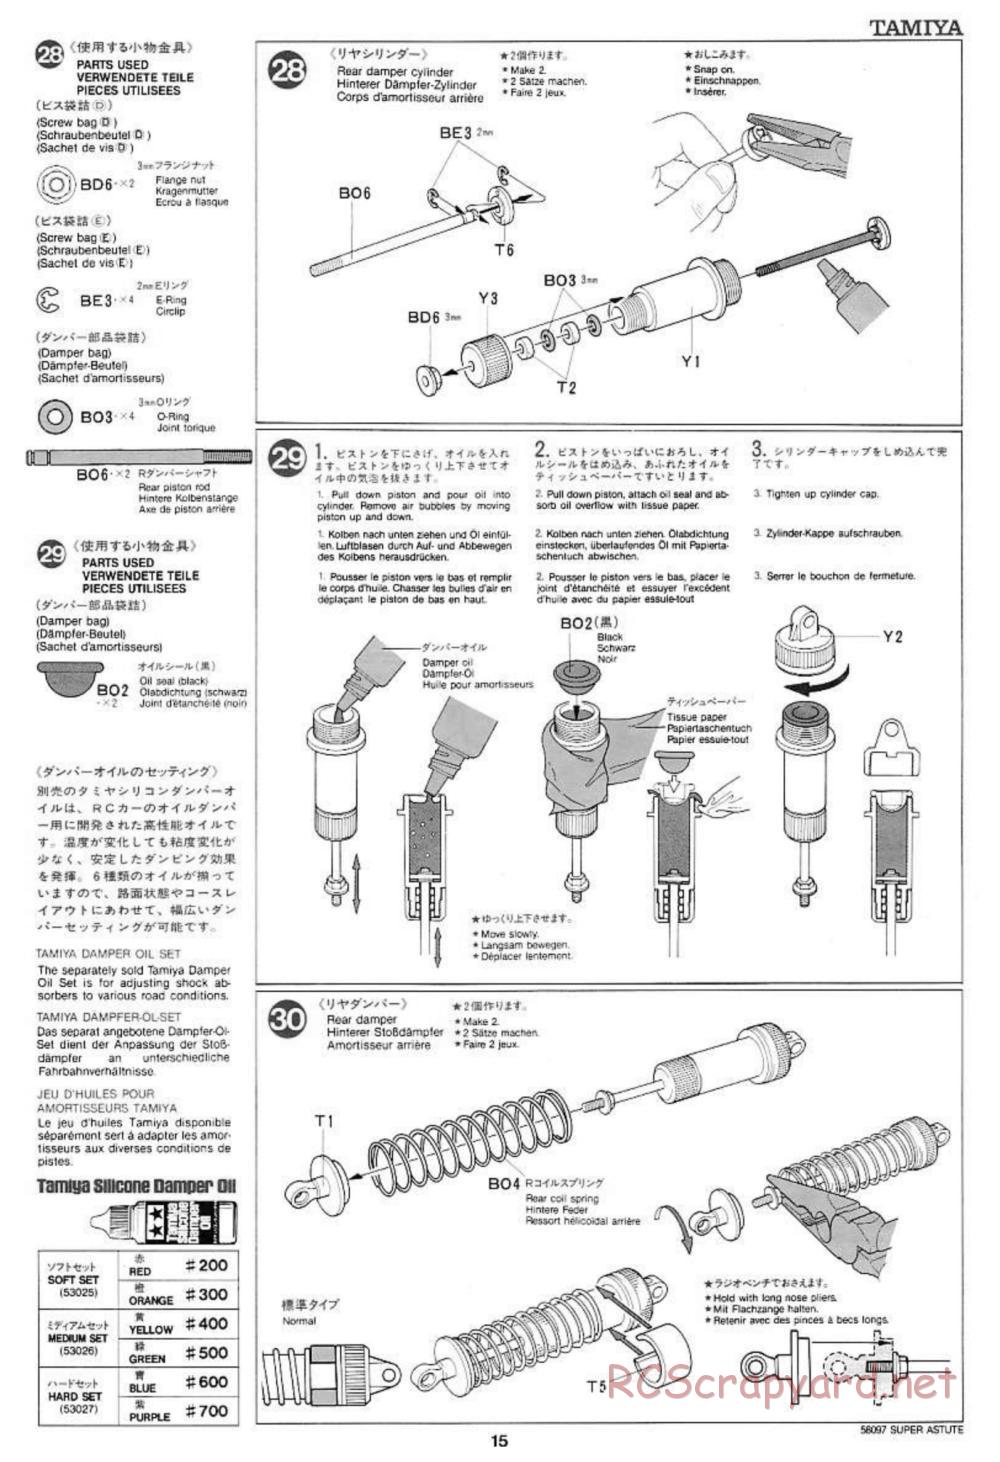 Tamiya - Super Astute - 58097 - Manual - Page 15